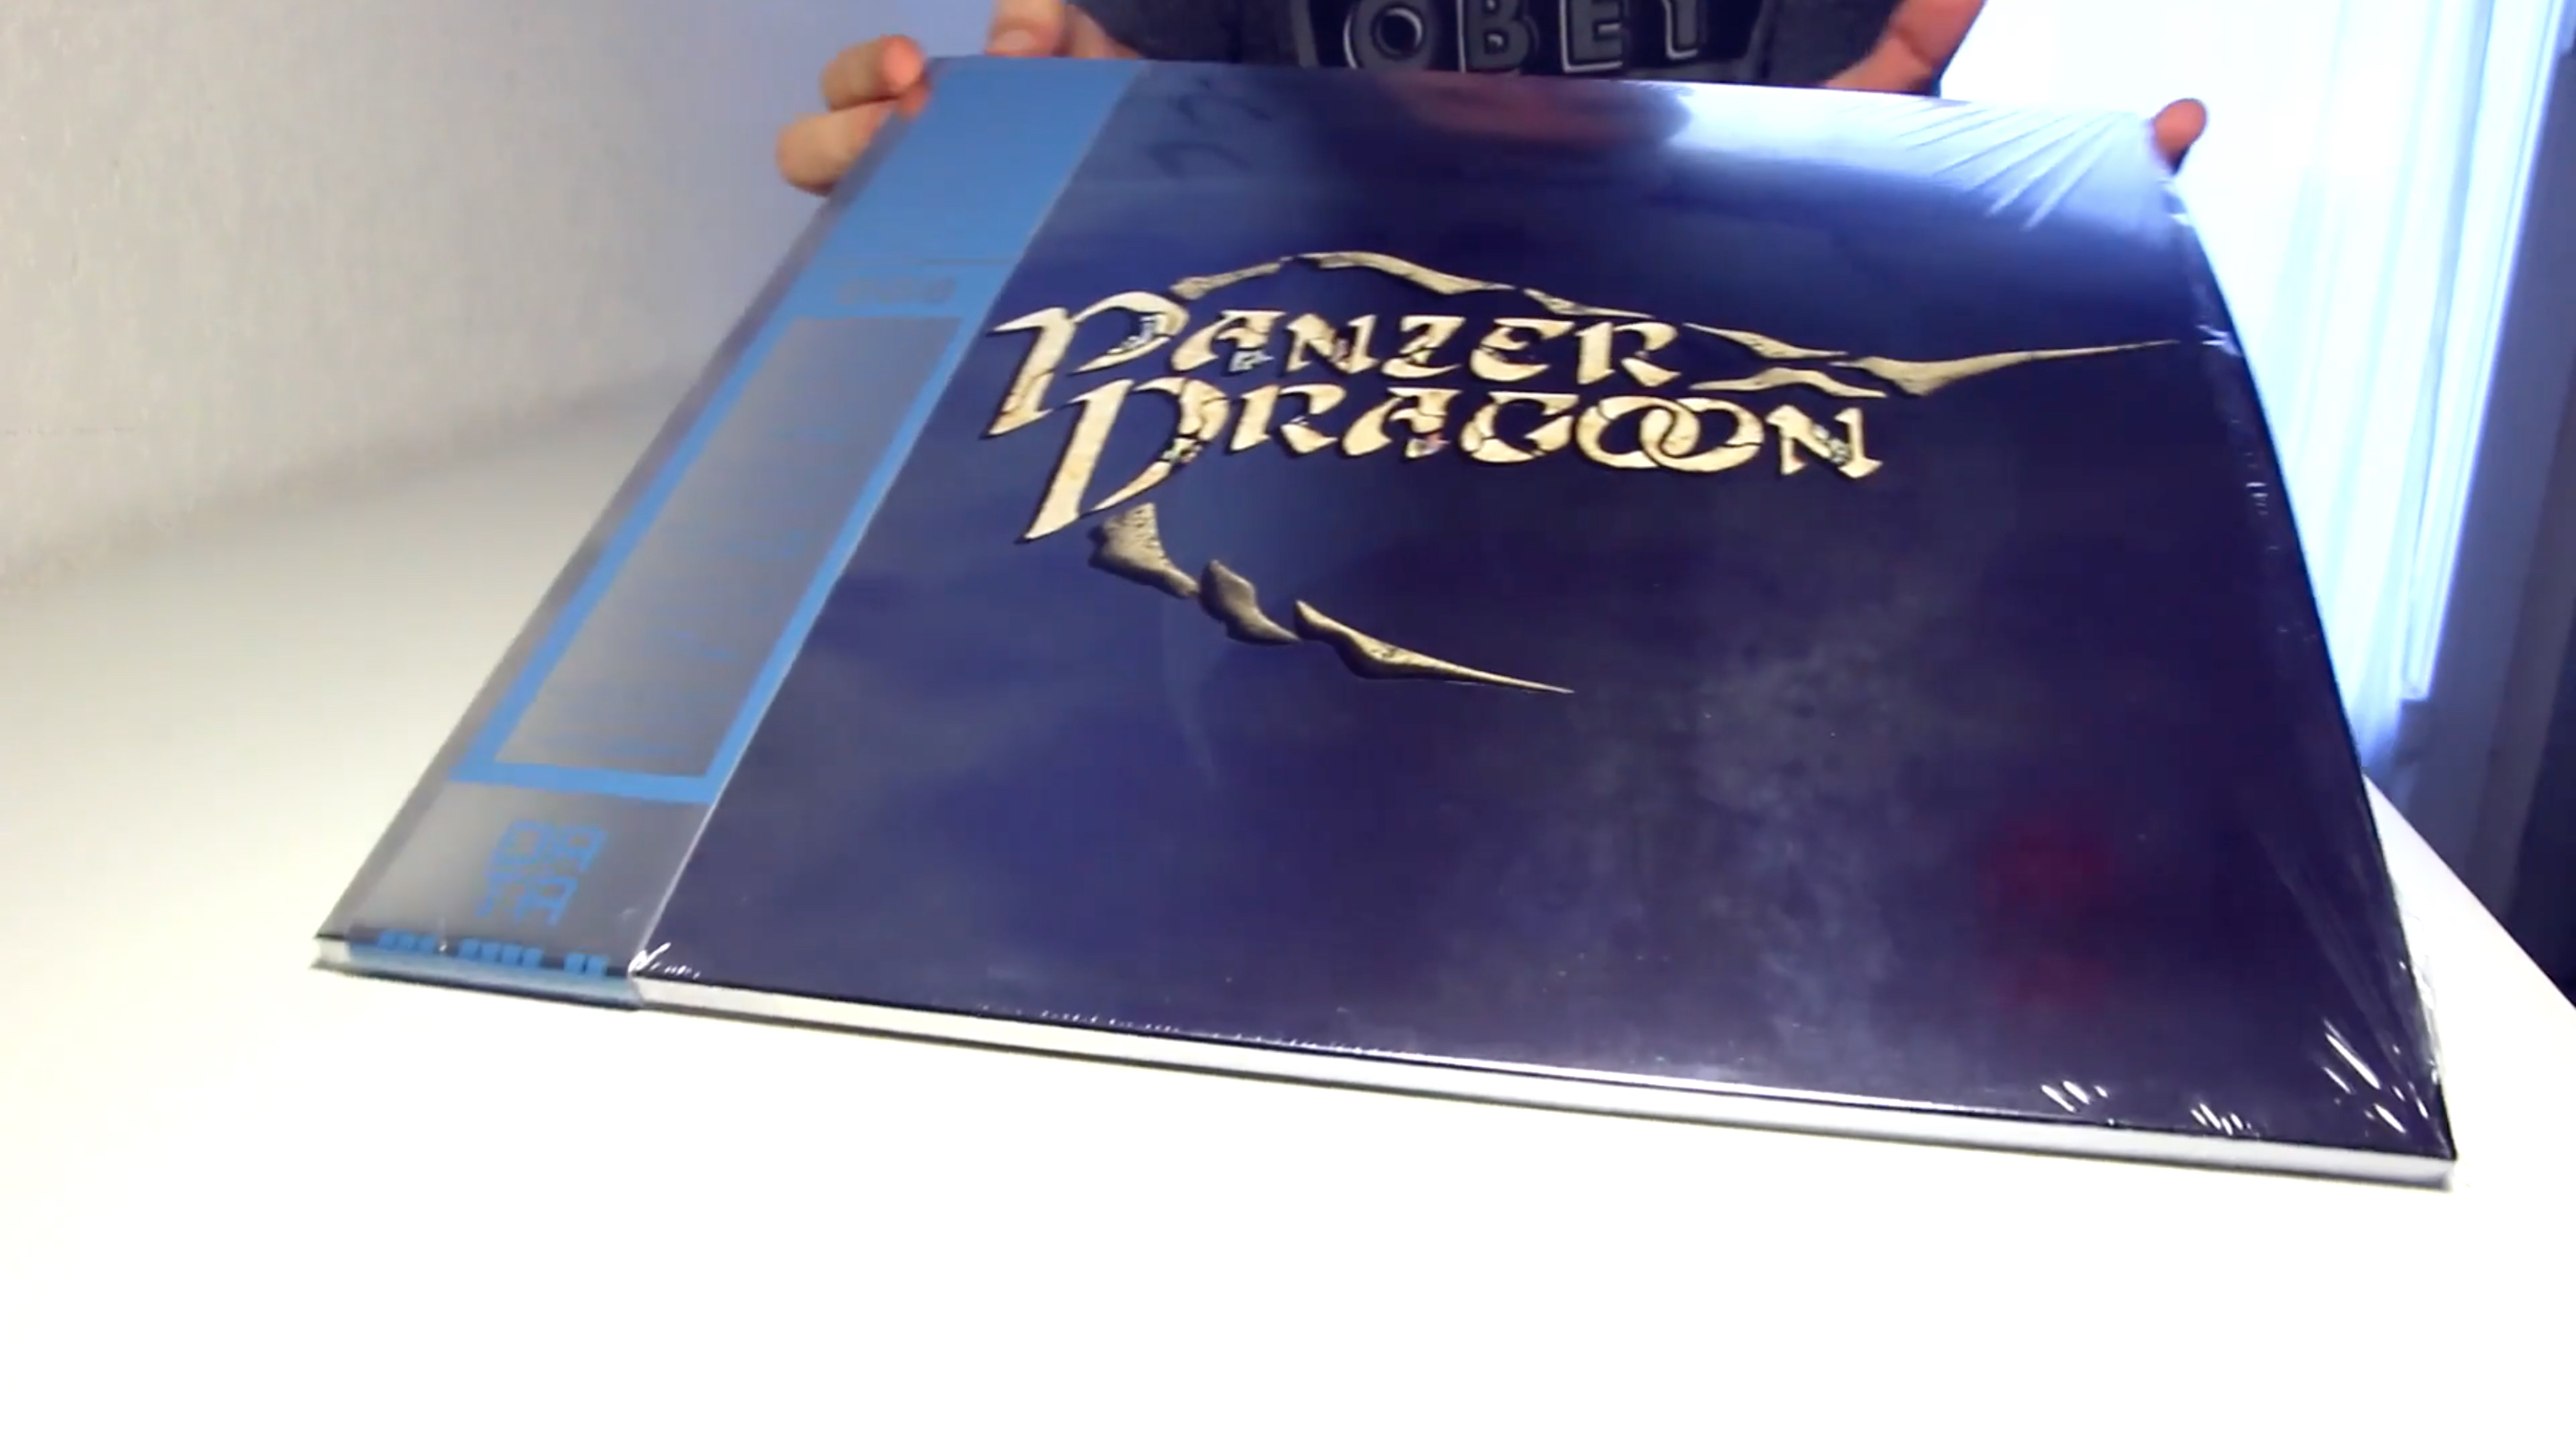 Panzer Dragoon (Original Game) Product Videos